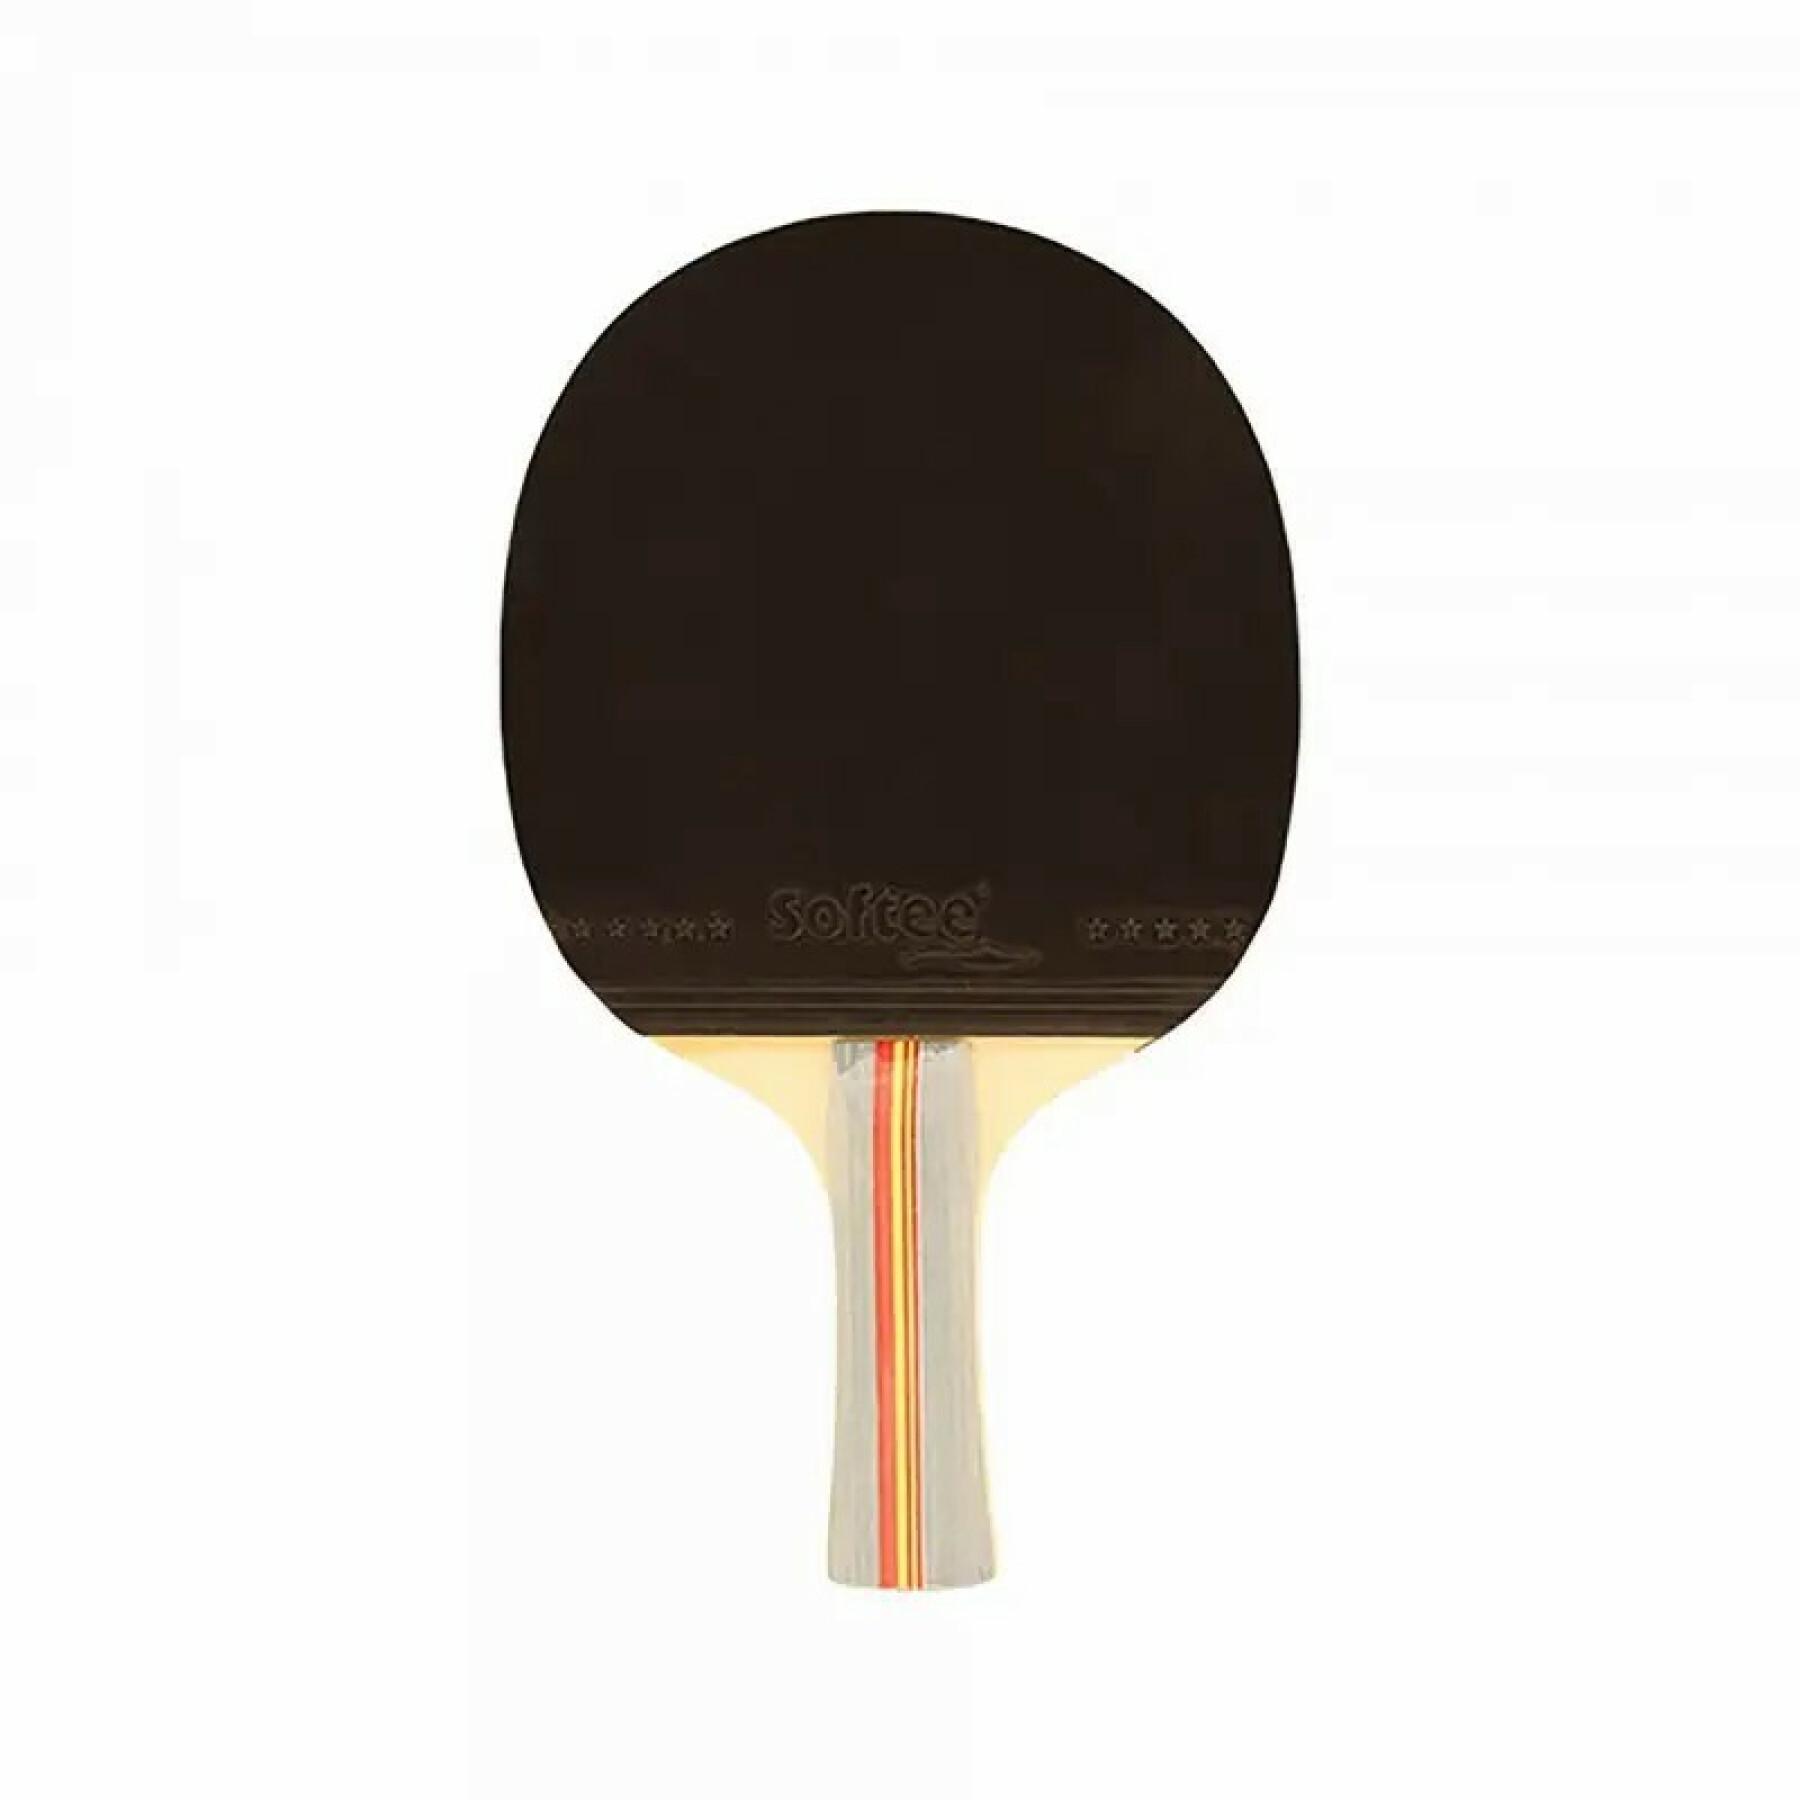 Raquette de tennis de table Softee P500